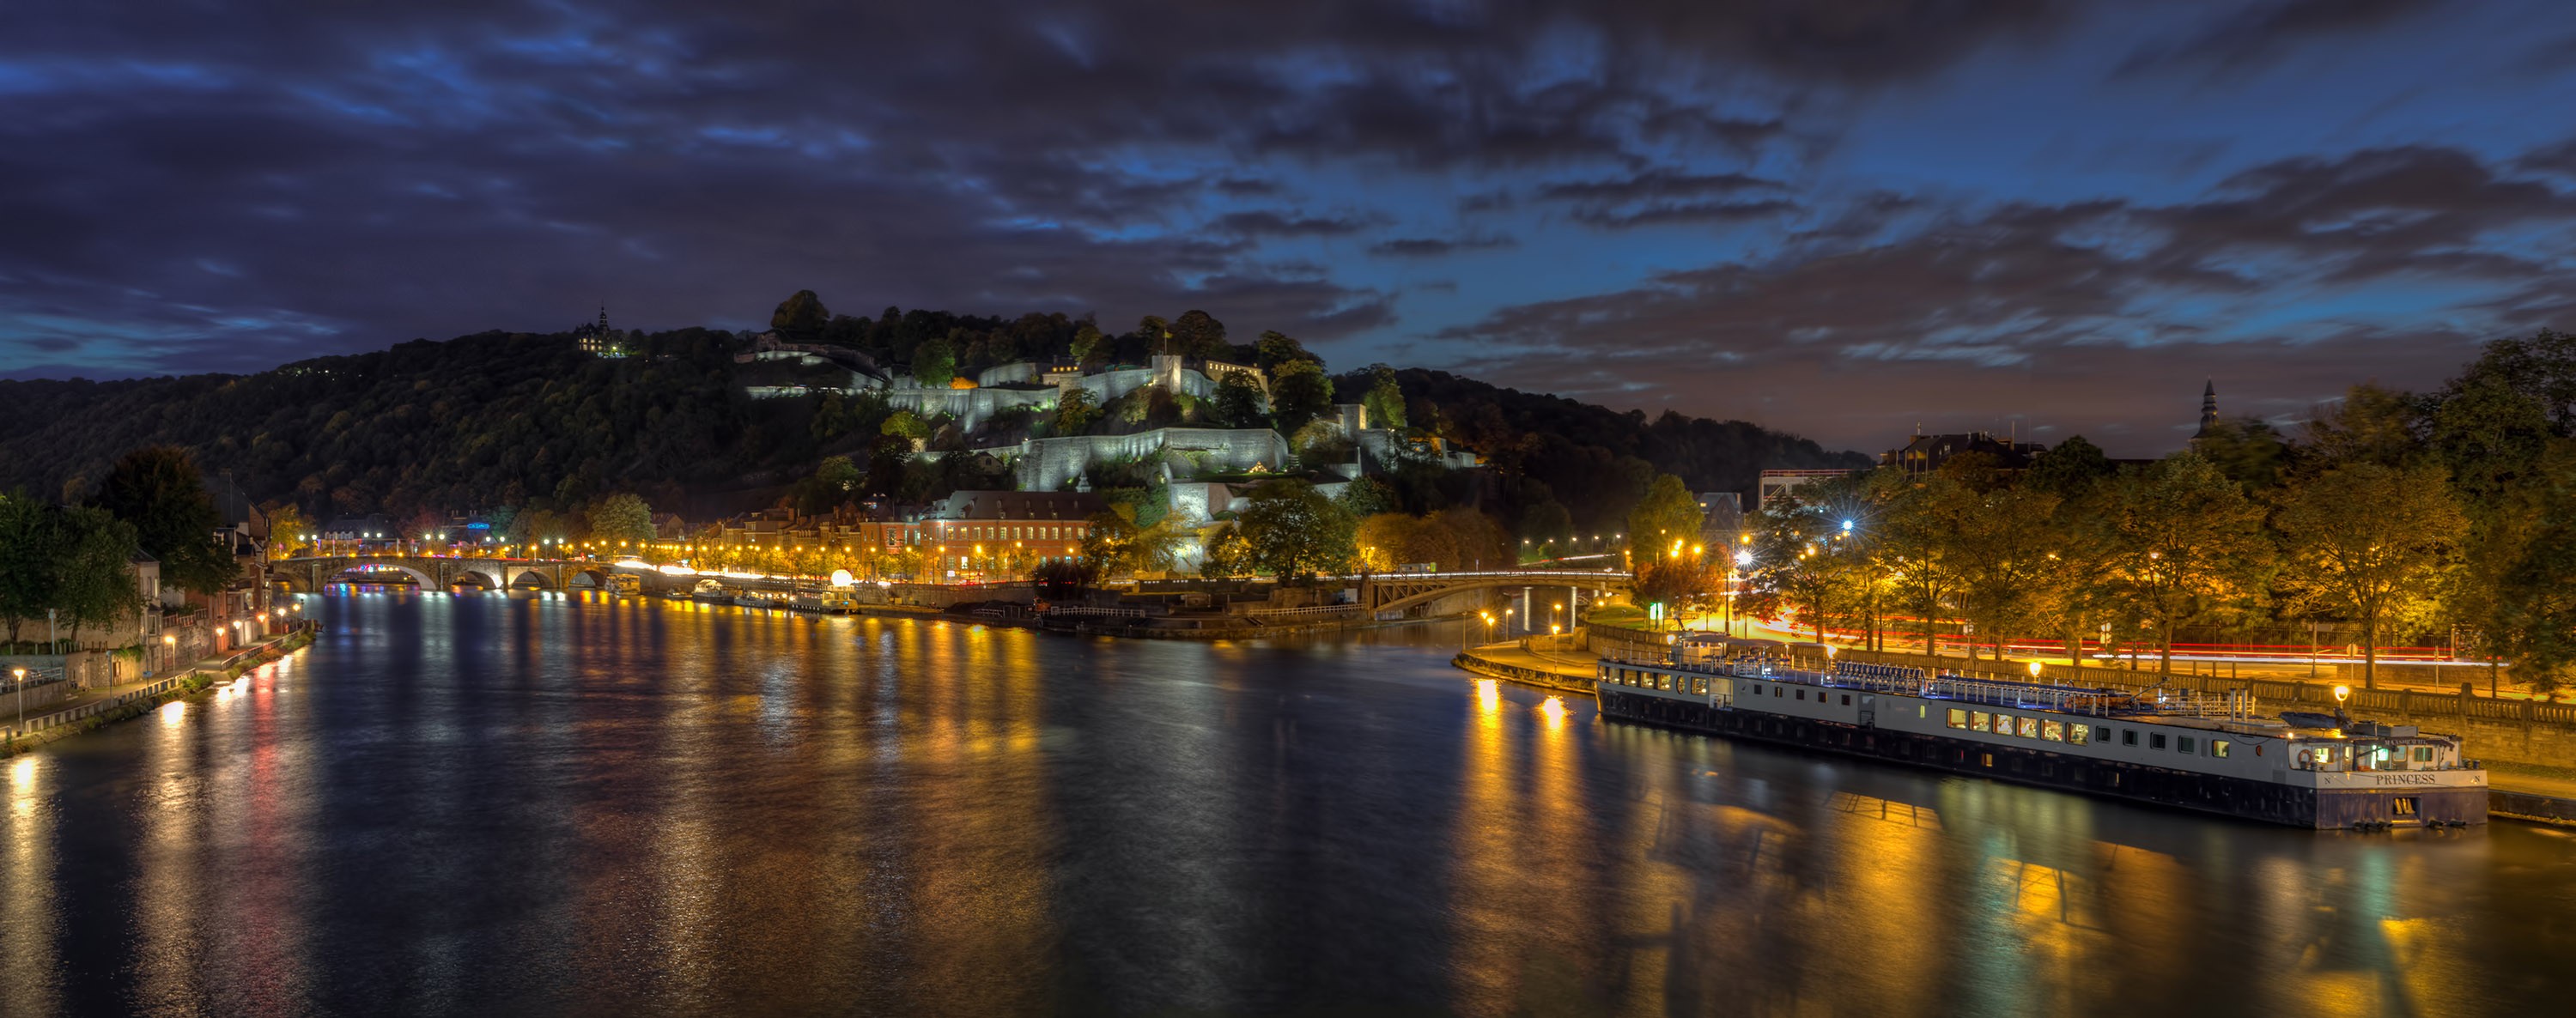 Citadel of Namur | World Heritage Journeys of Europe